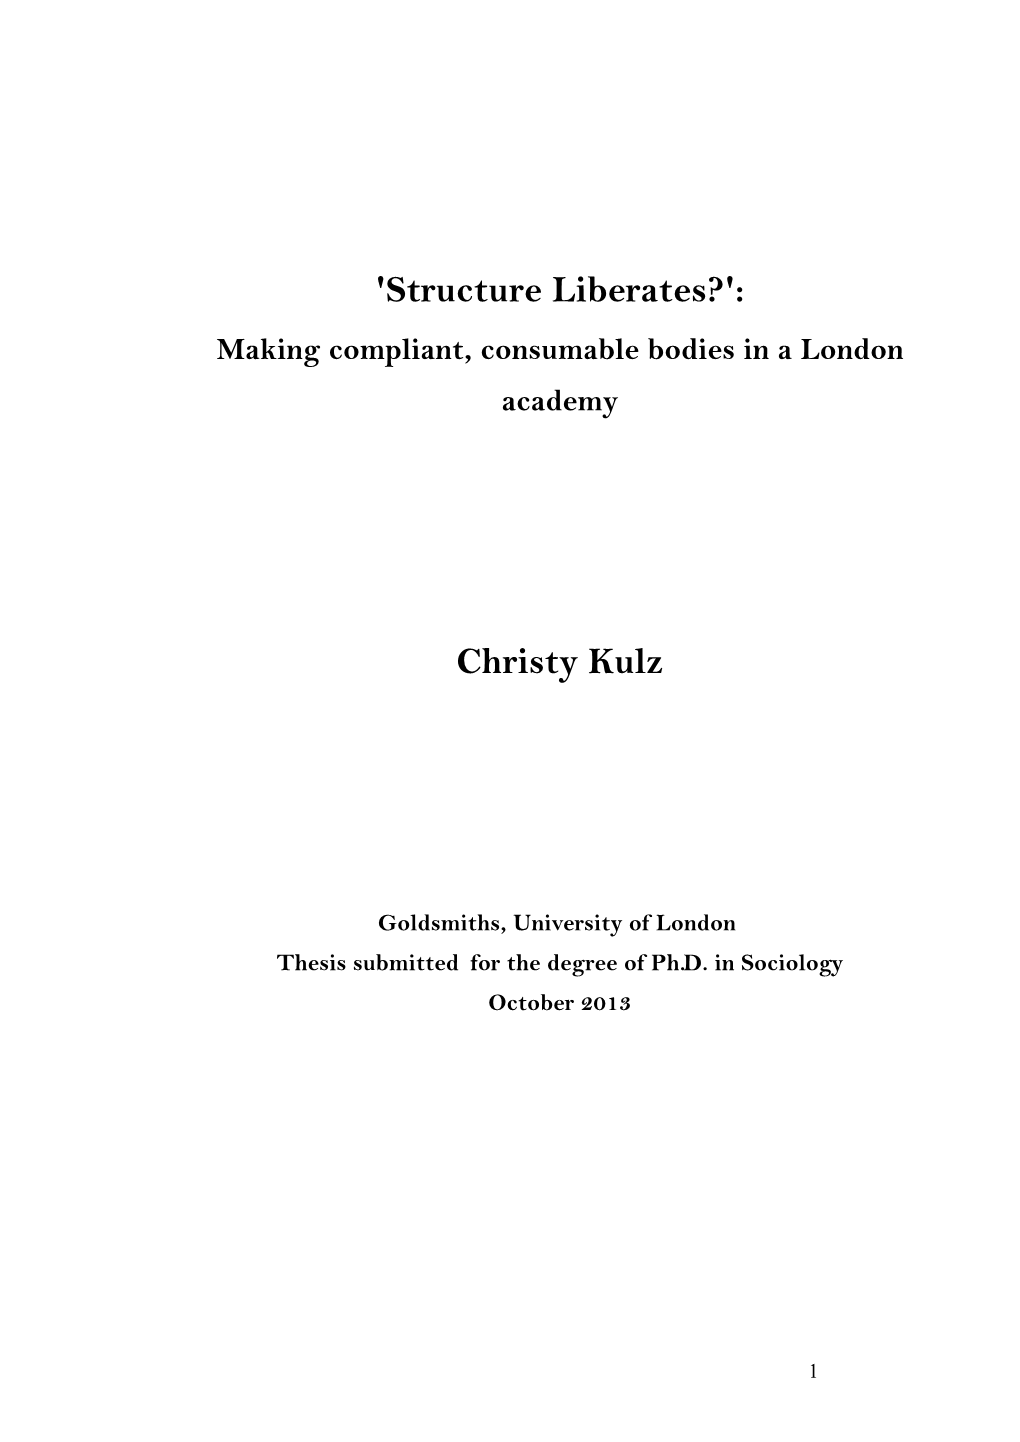 'Structure Liberates?': Christy Kulz